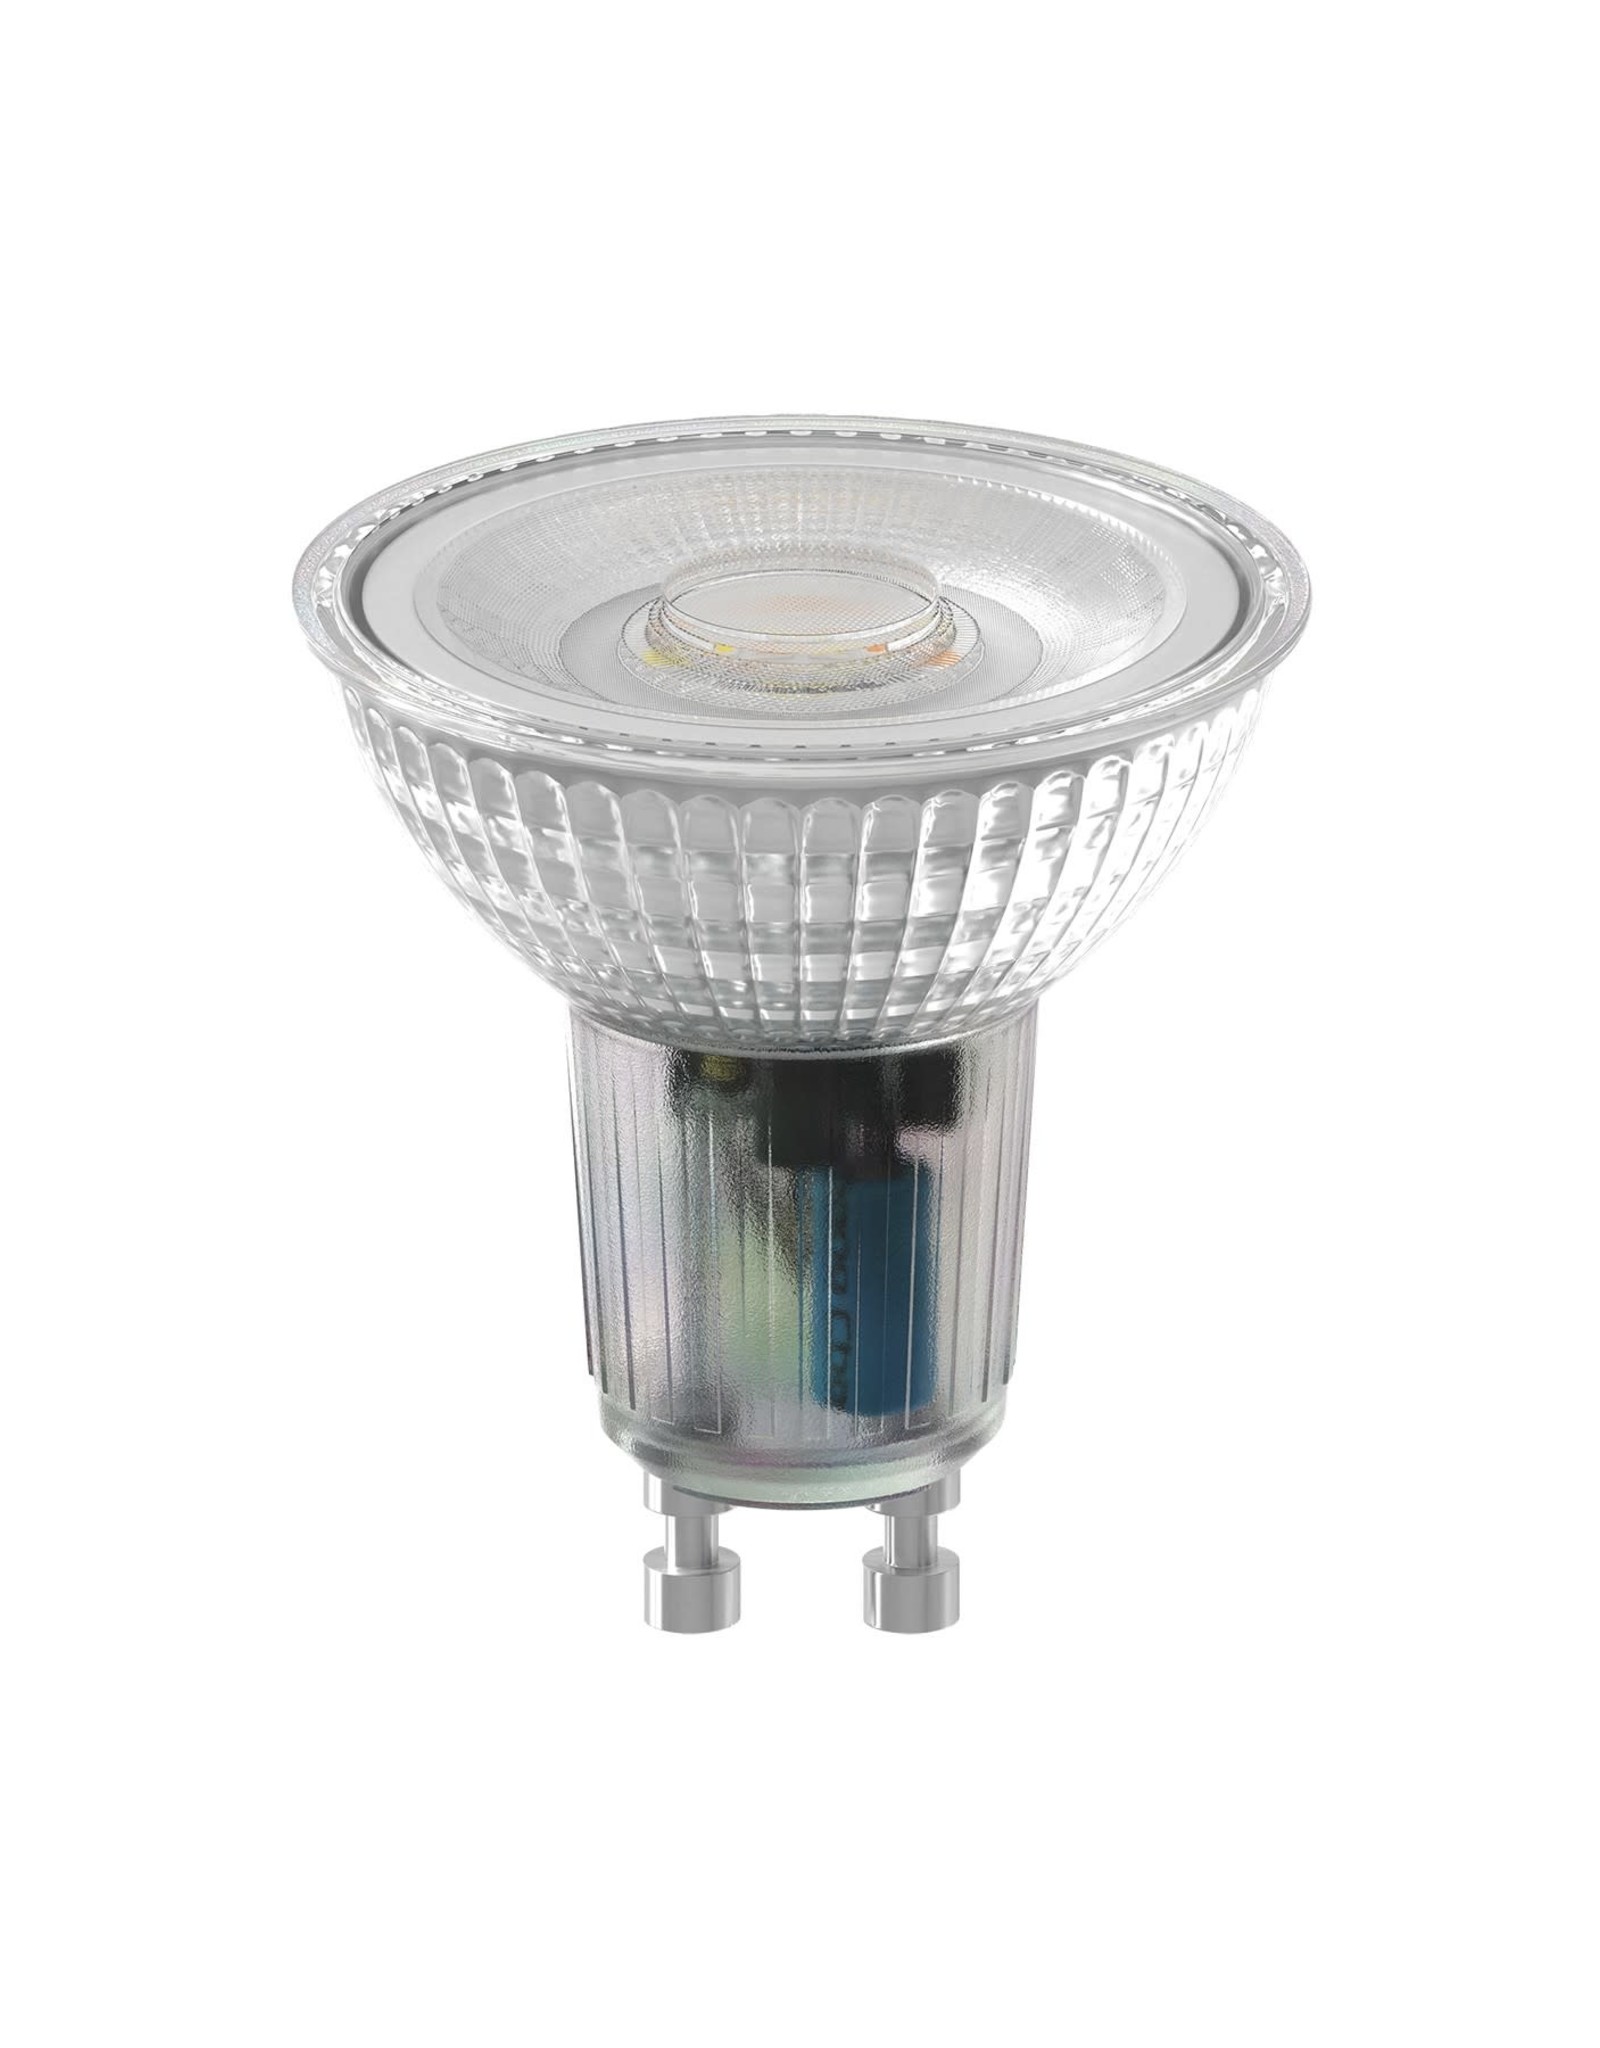 Calex Calex Smart LED Reflector-lamp GU10 220-240V 4.9W 345lm 2200-4000K